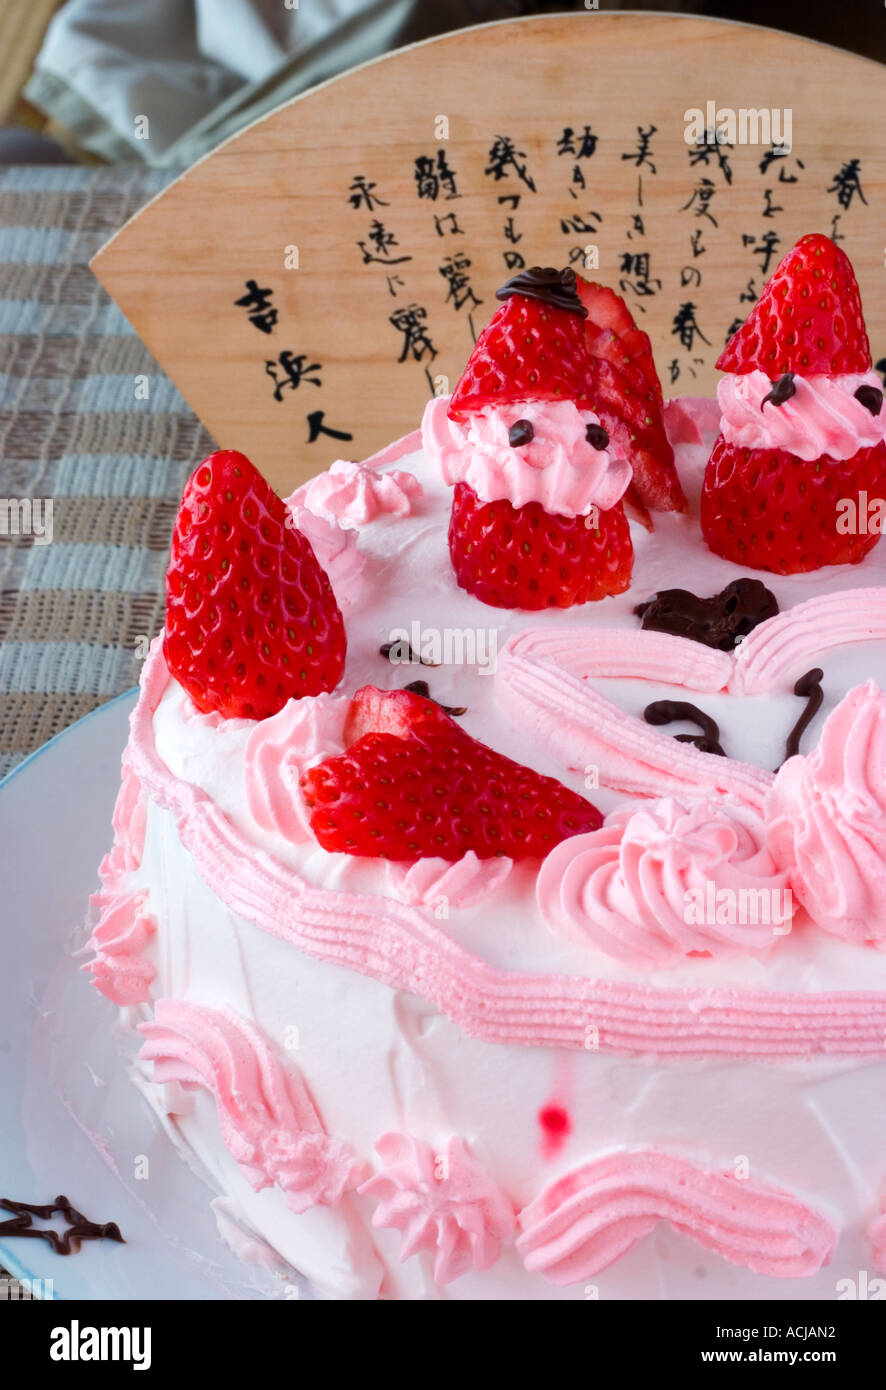 Un japonés fresa pastel de cumpleaños Fotografía de stock - Alamy